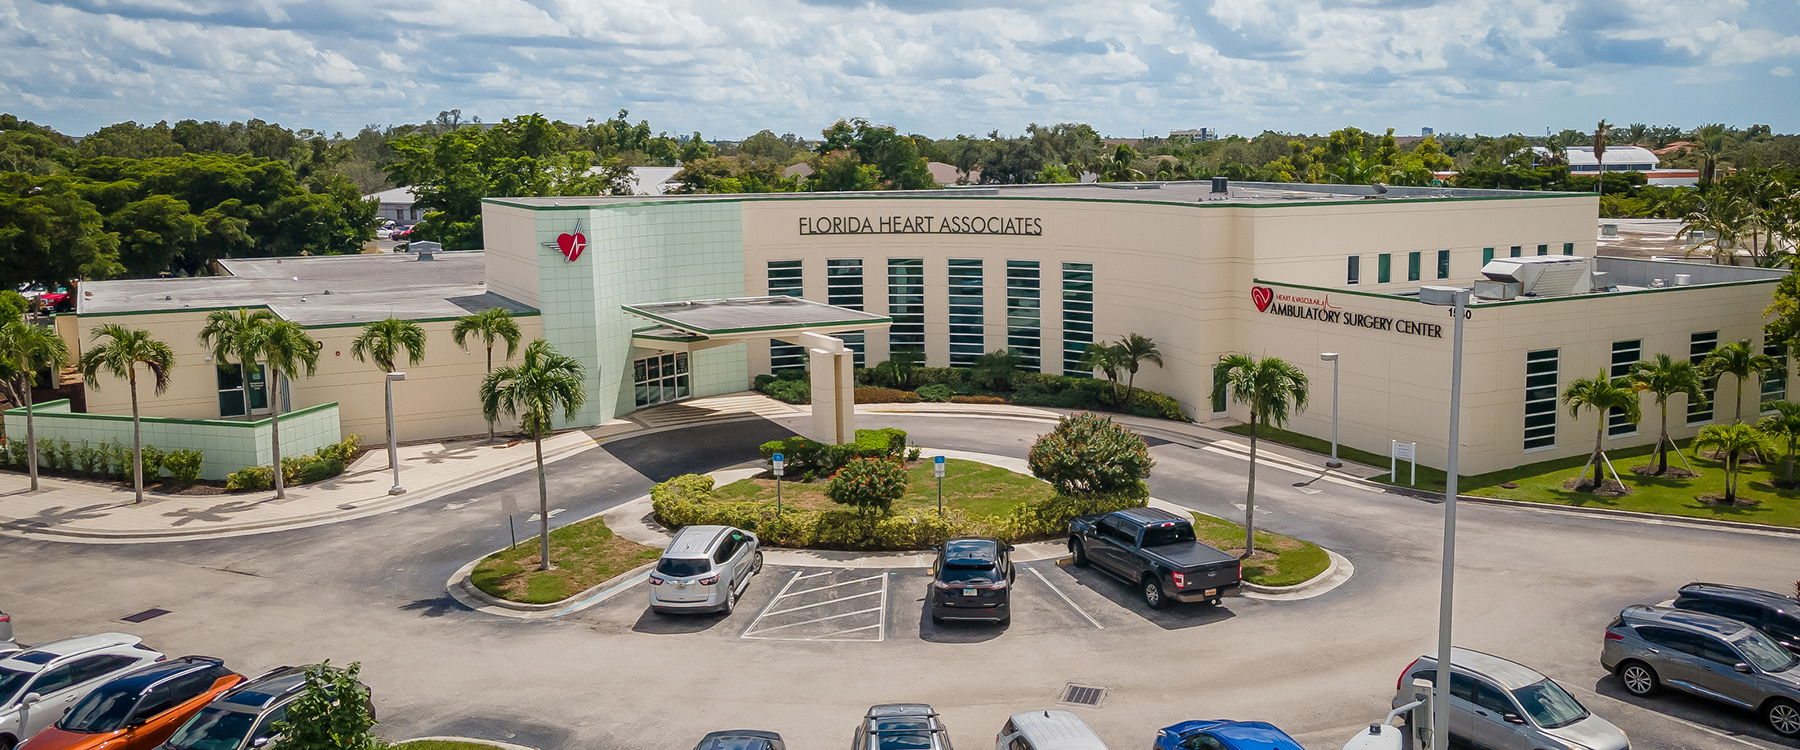 Florida Heart Associates, Ambulatory Surgery Center